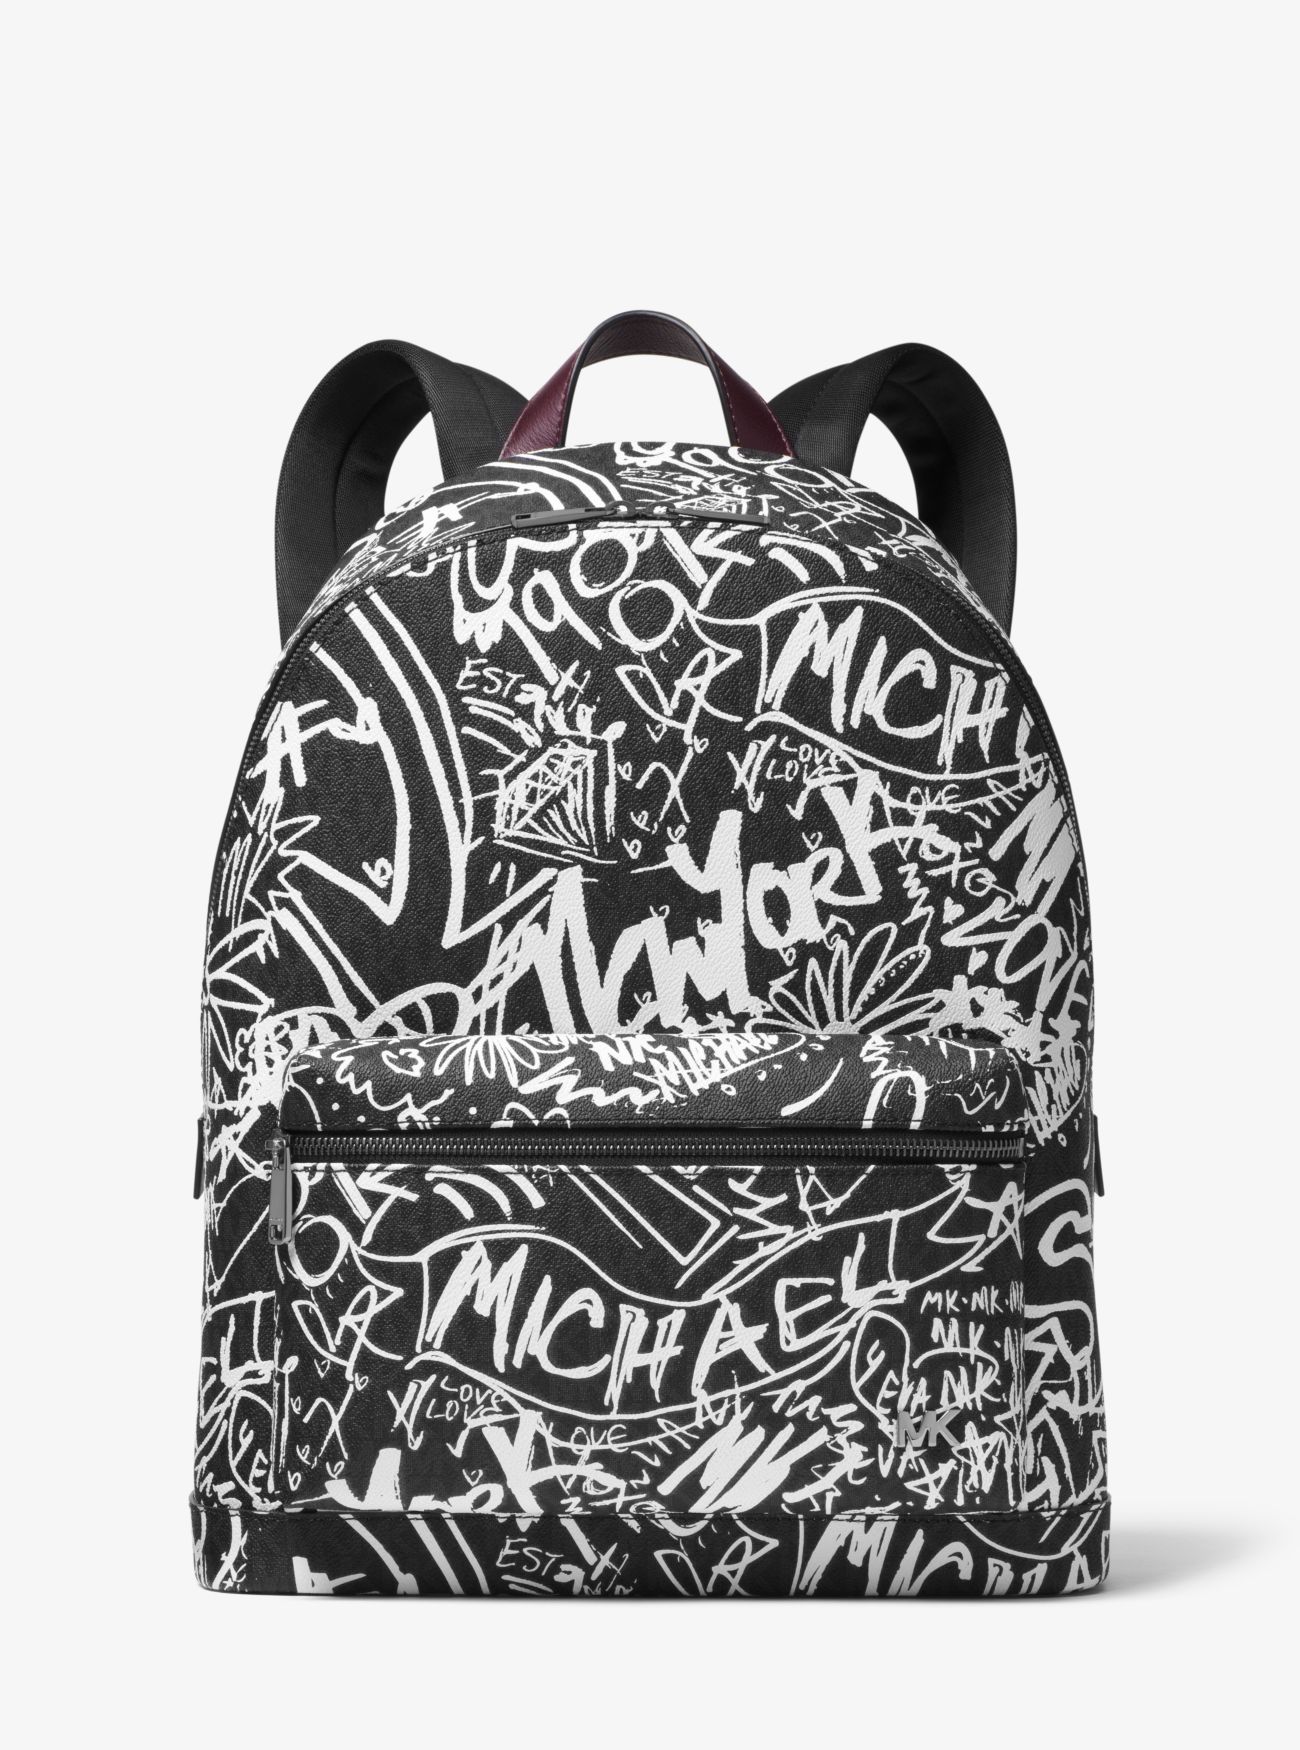 Jet Set Graffiti Backpack Michael Kors